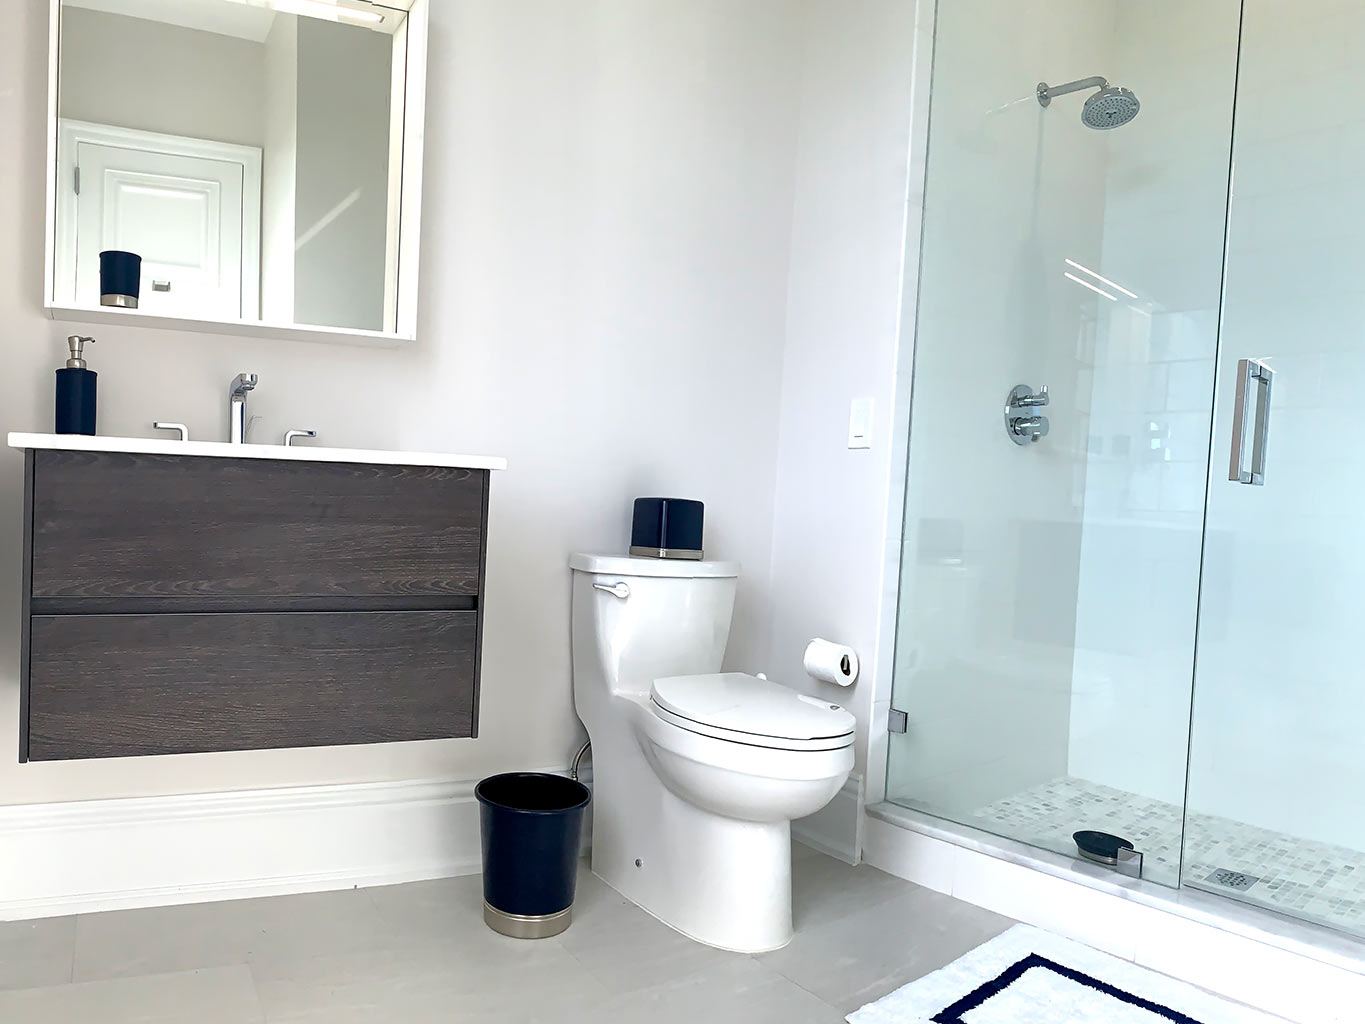 Complete small bathroom remodel in Miami-Dade